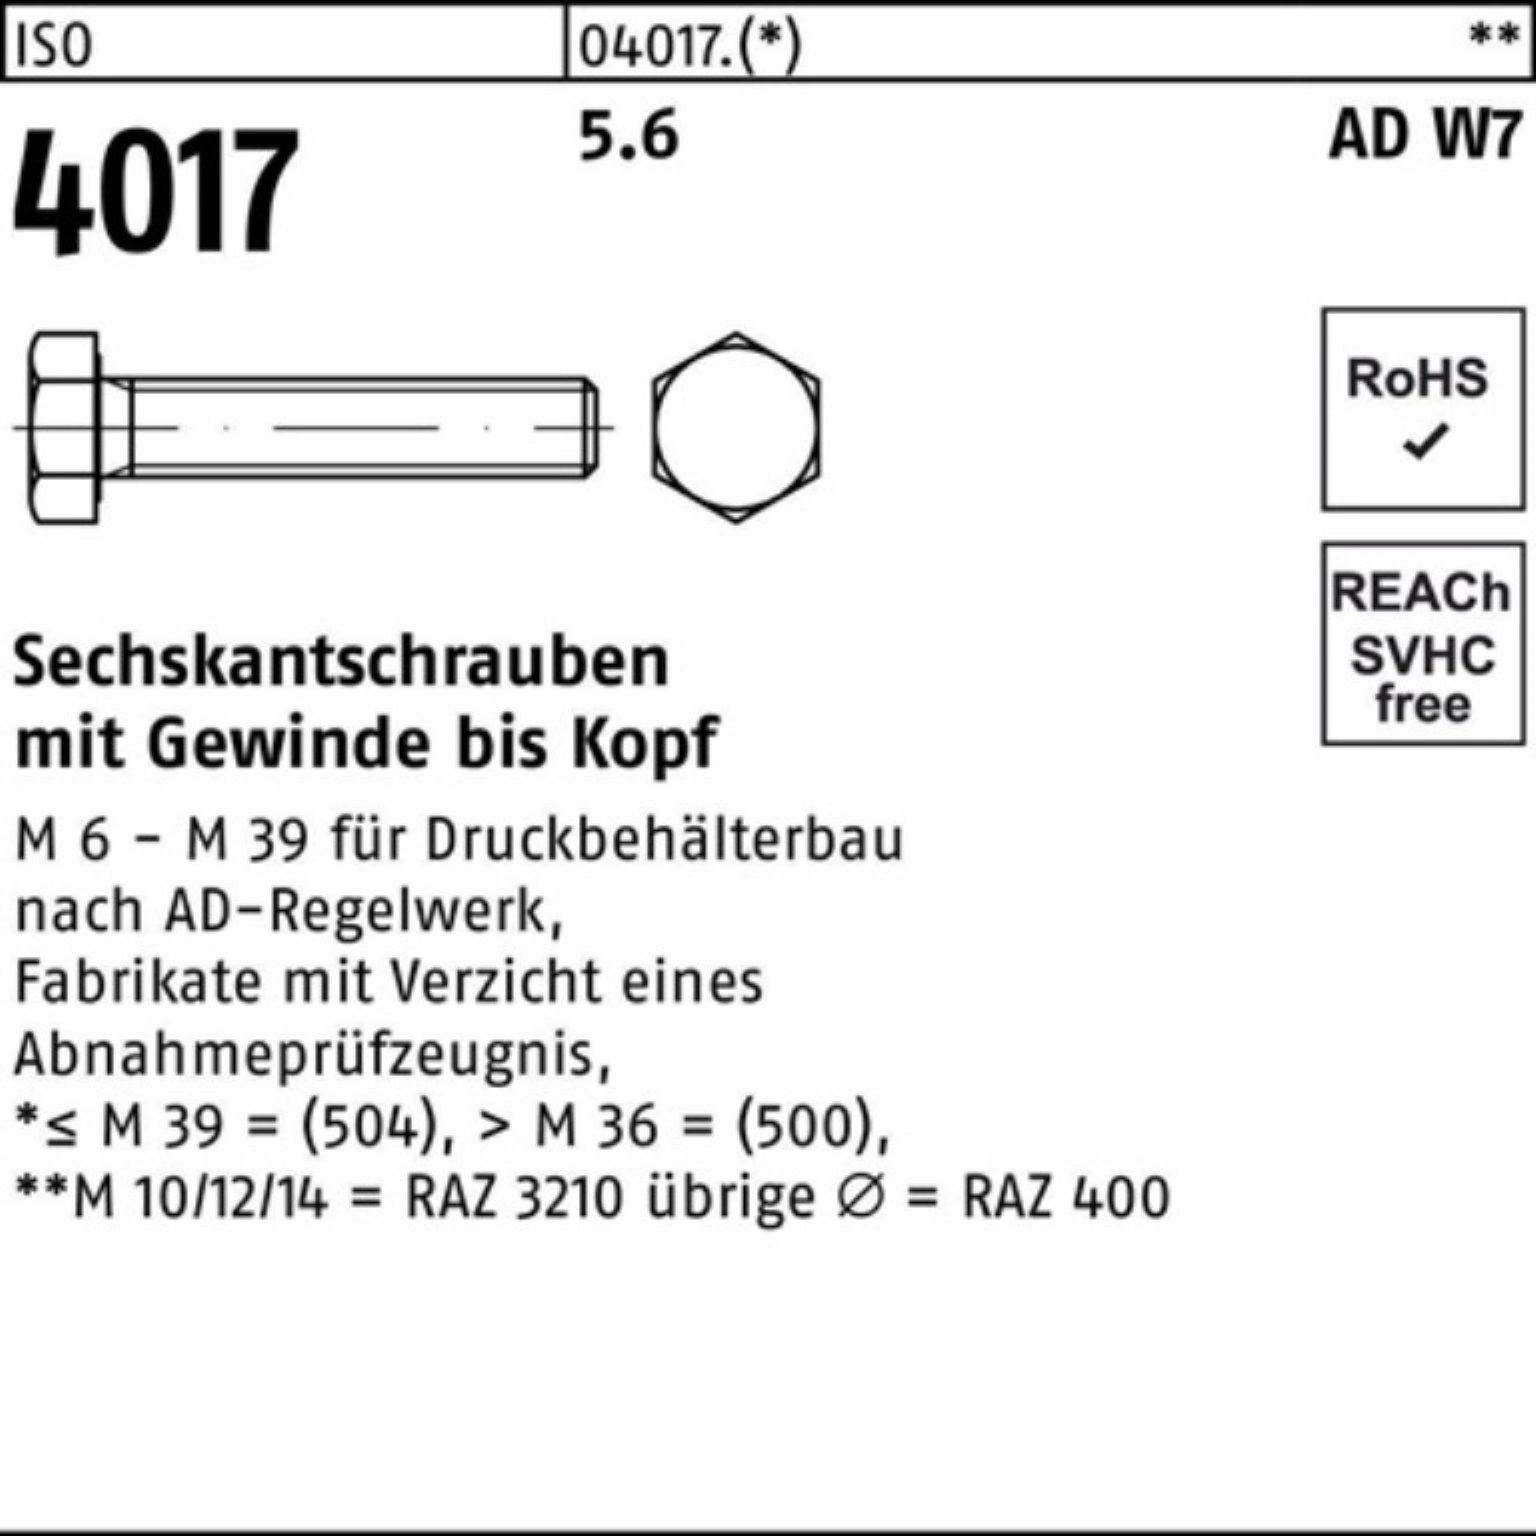 Sechskantschraube Sechskantschraube 25 M16x 100 Stück 100er 5.6 VG Pack W7 4017 Bufab AD ISO